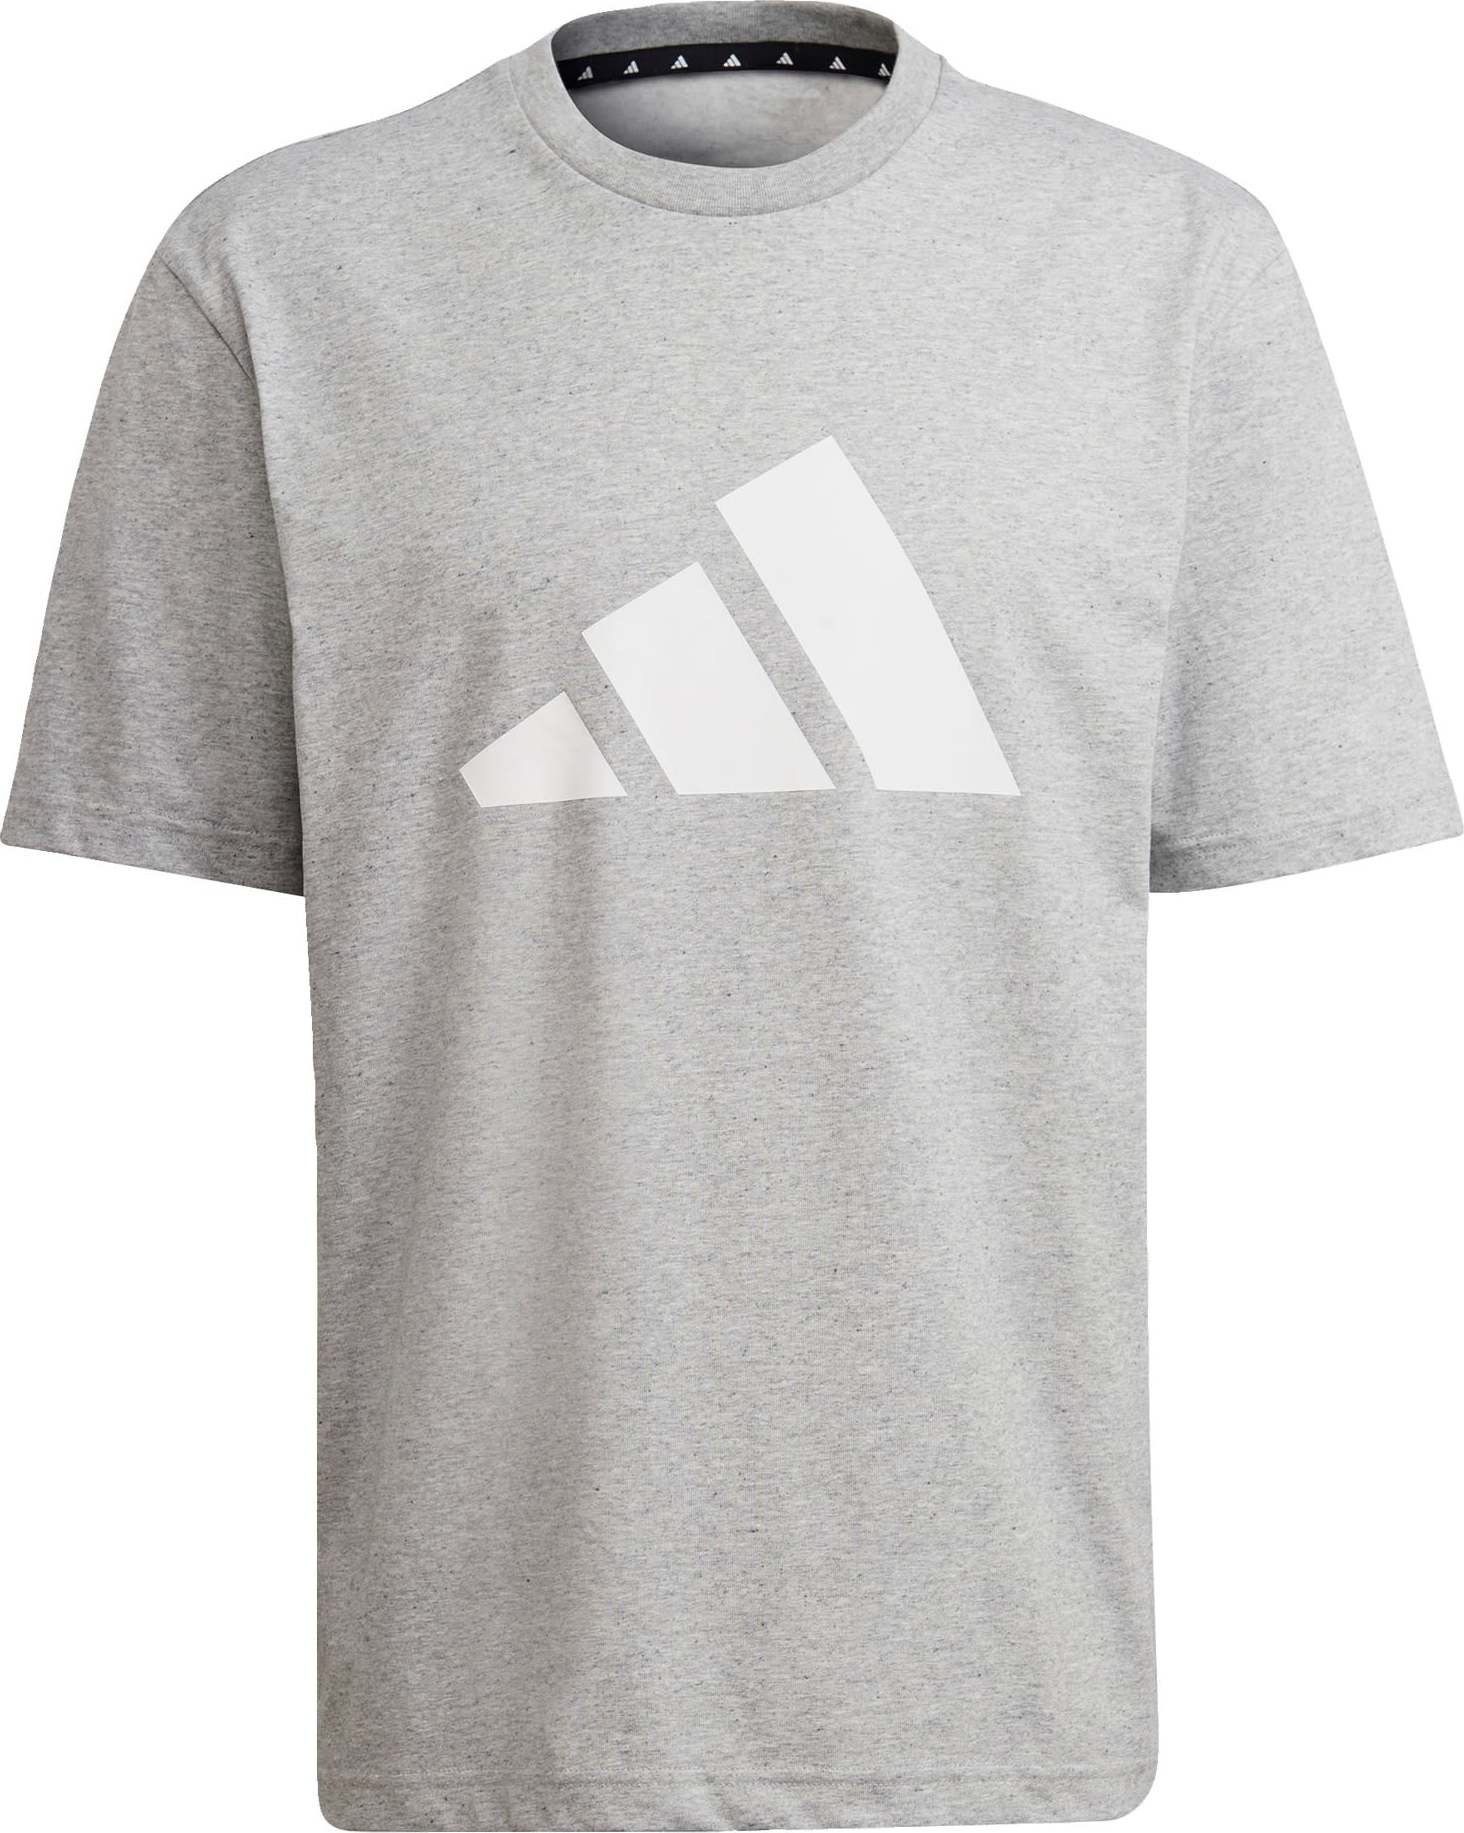 ADIDAS PERFORMANCE Funkční tričko šedý melír / černá / bílá